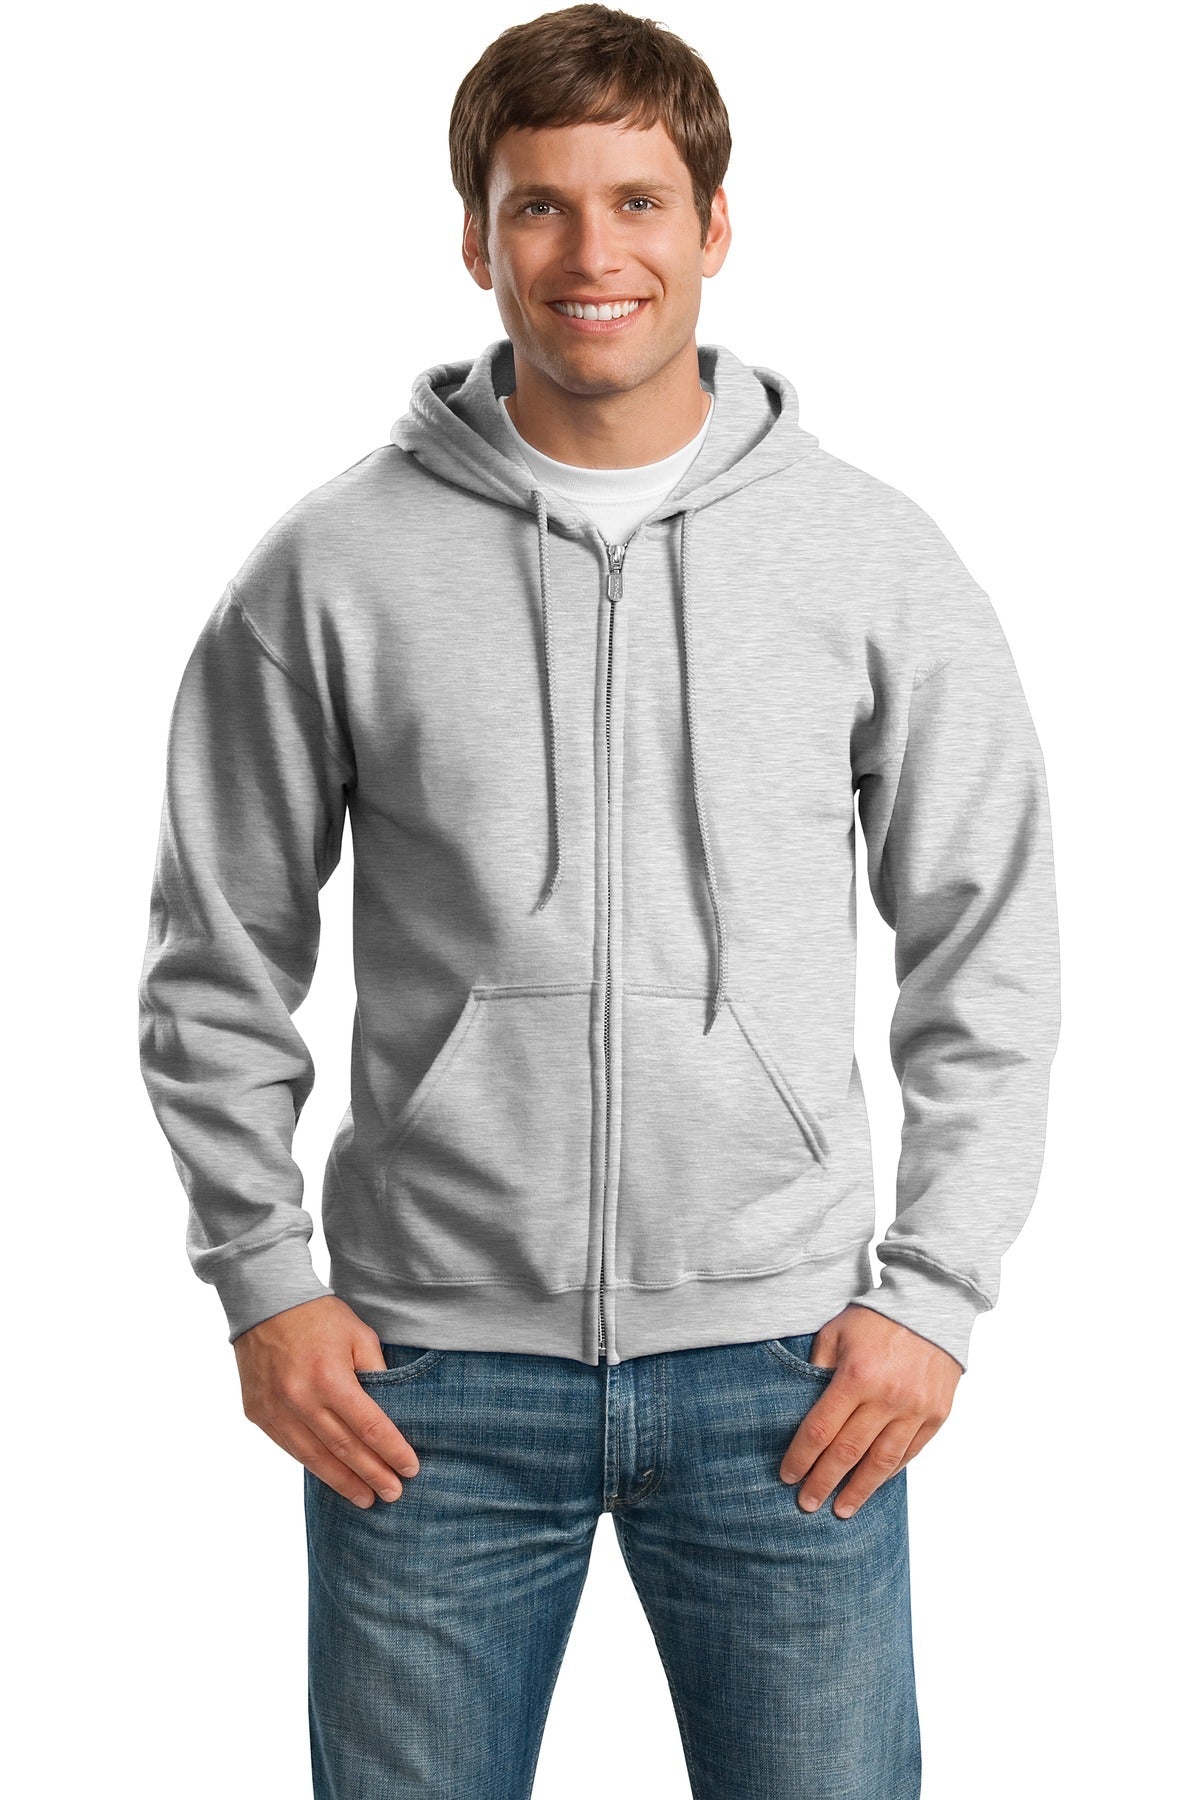 Gildan Heavy Blend FullZip Hooded Sweatshirt 18600